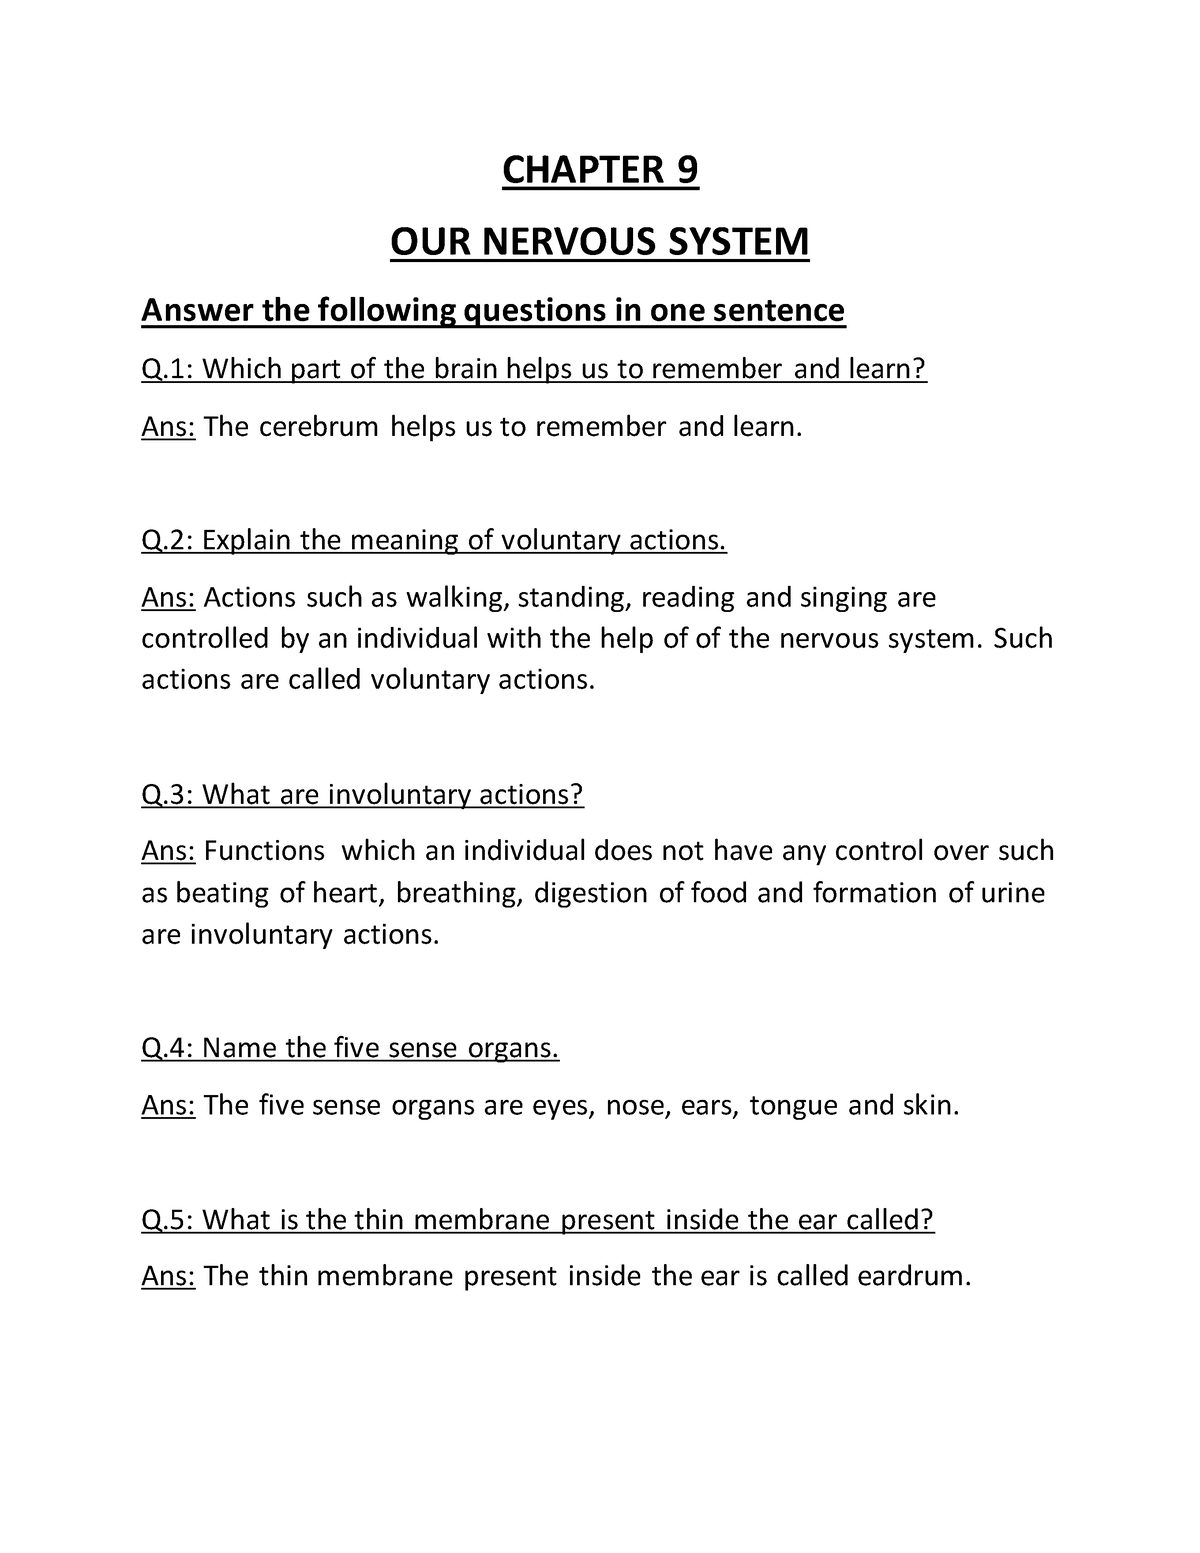 nervous system case study answers